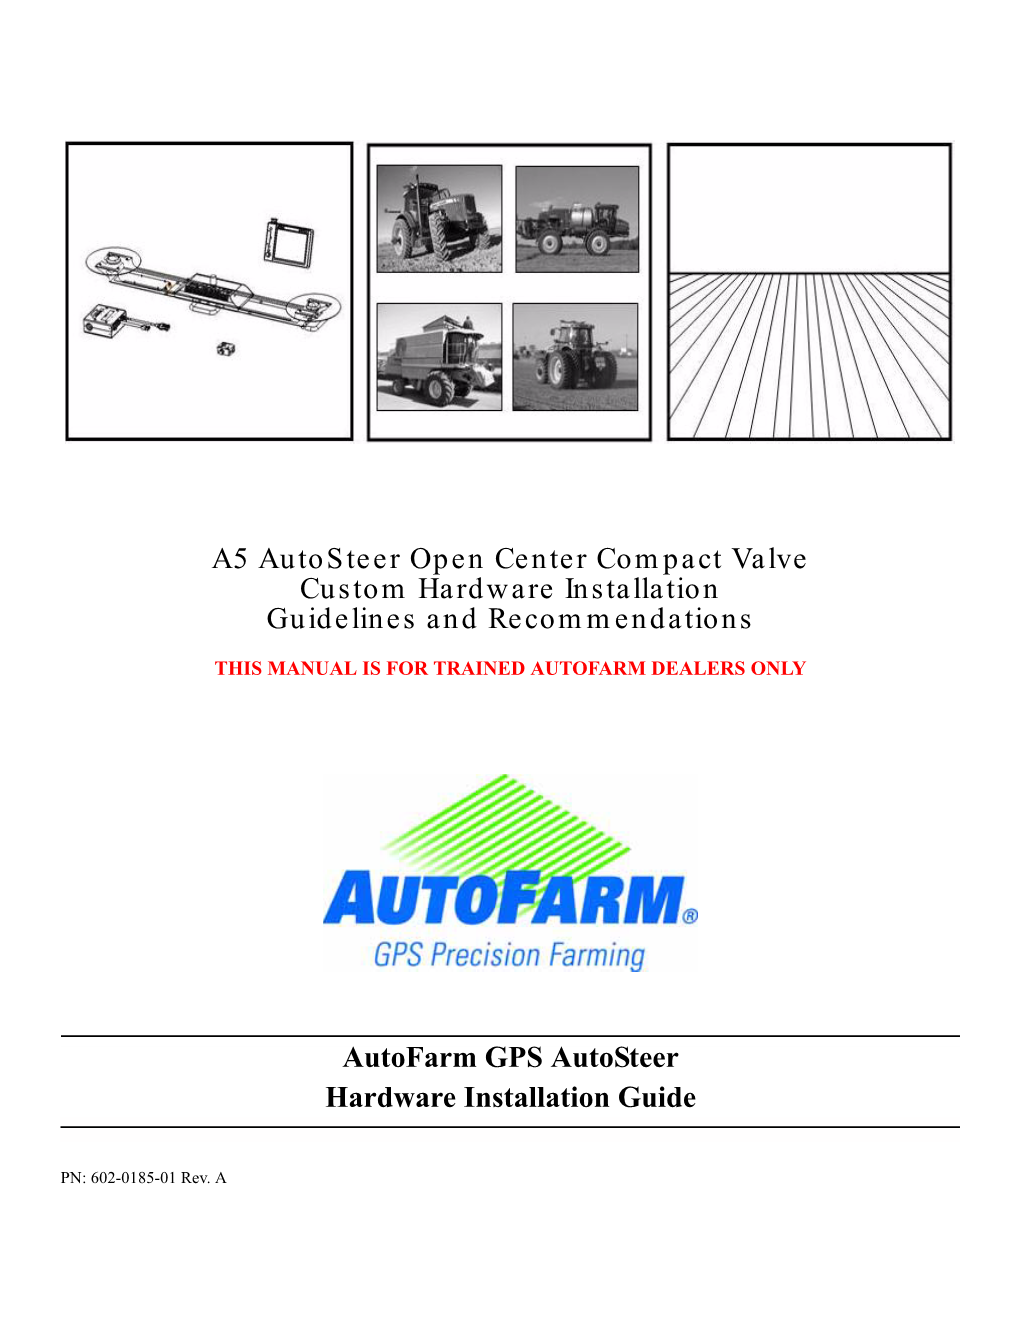 Autofarm GPS Autosteer Hardware Installation Guide